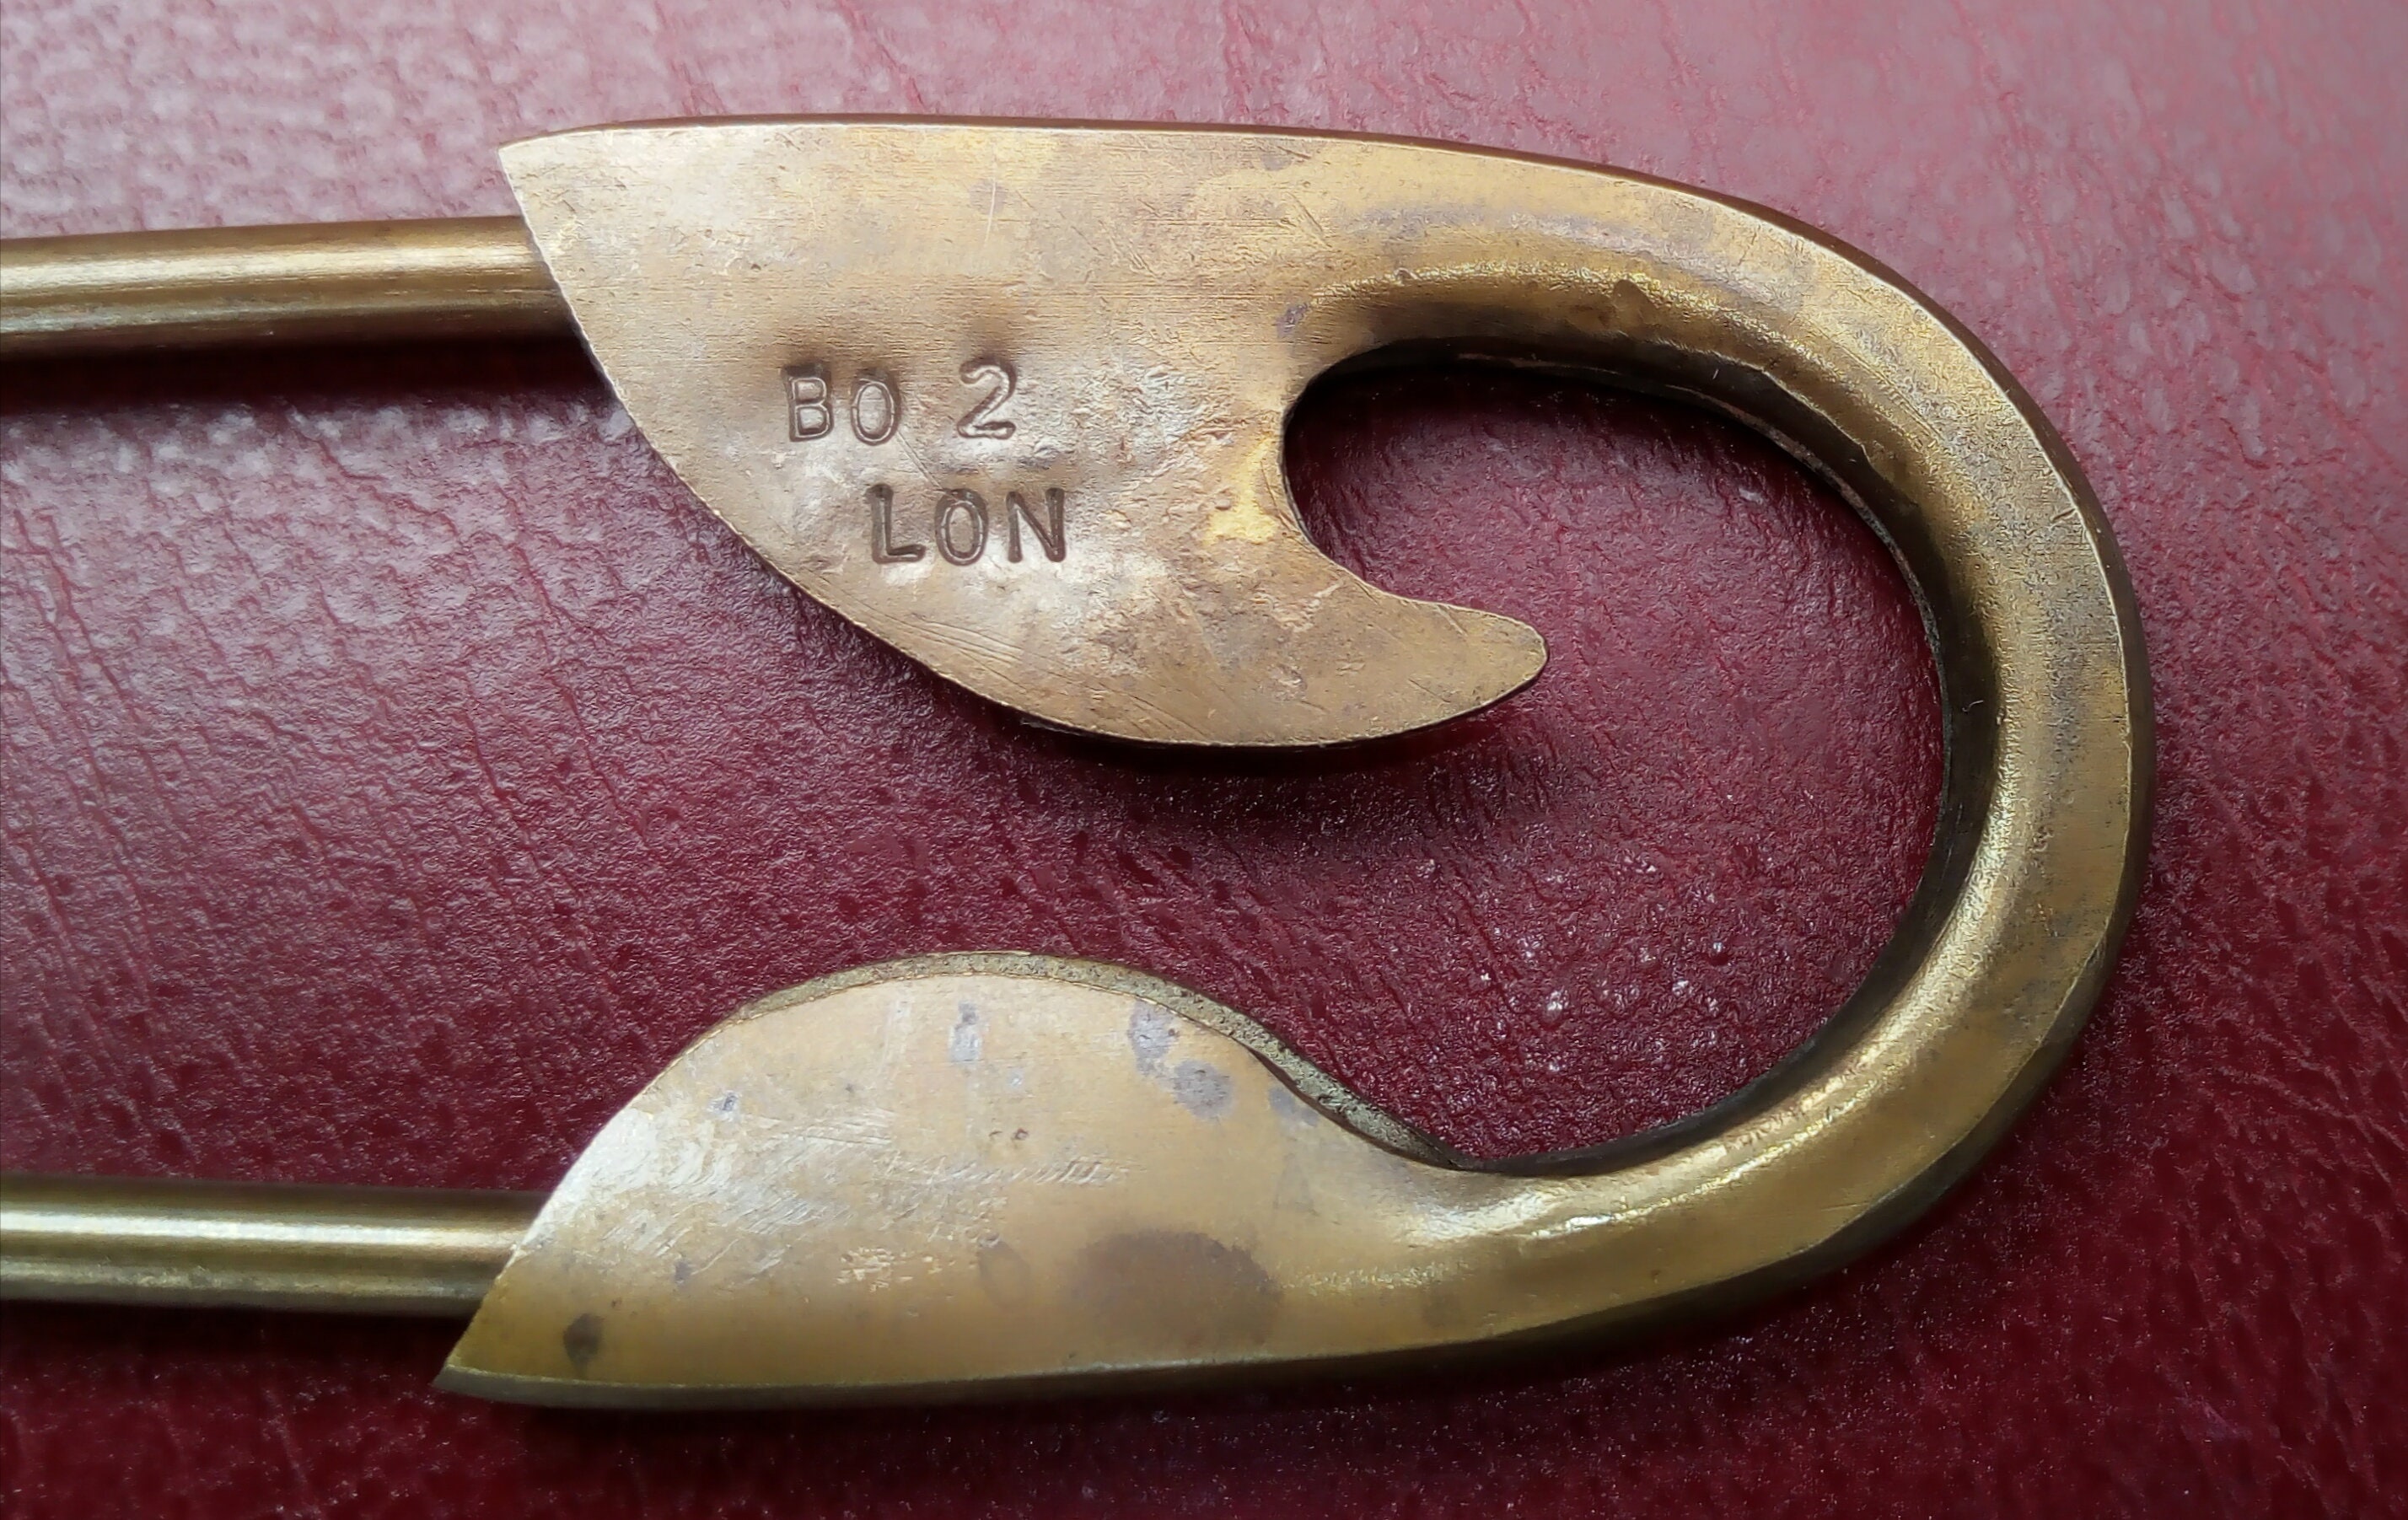 Set of Three Large Vintage Brass Safety Pins — Mid-Century Modern Finds